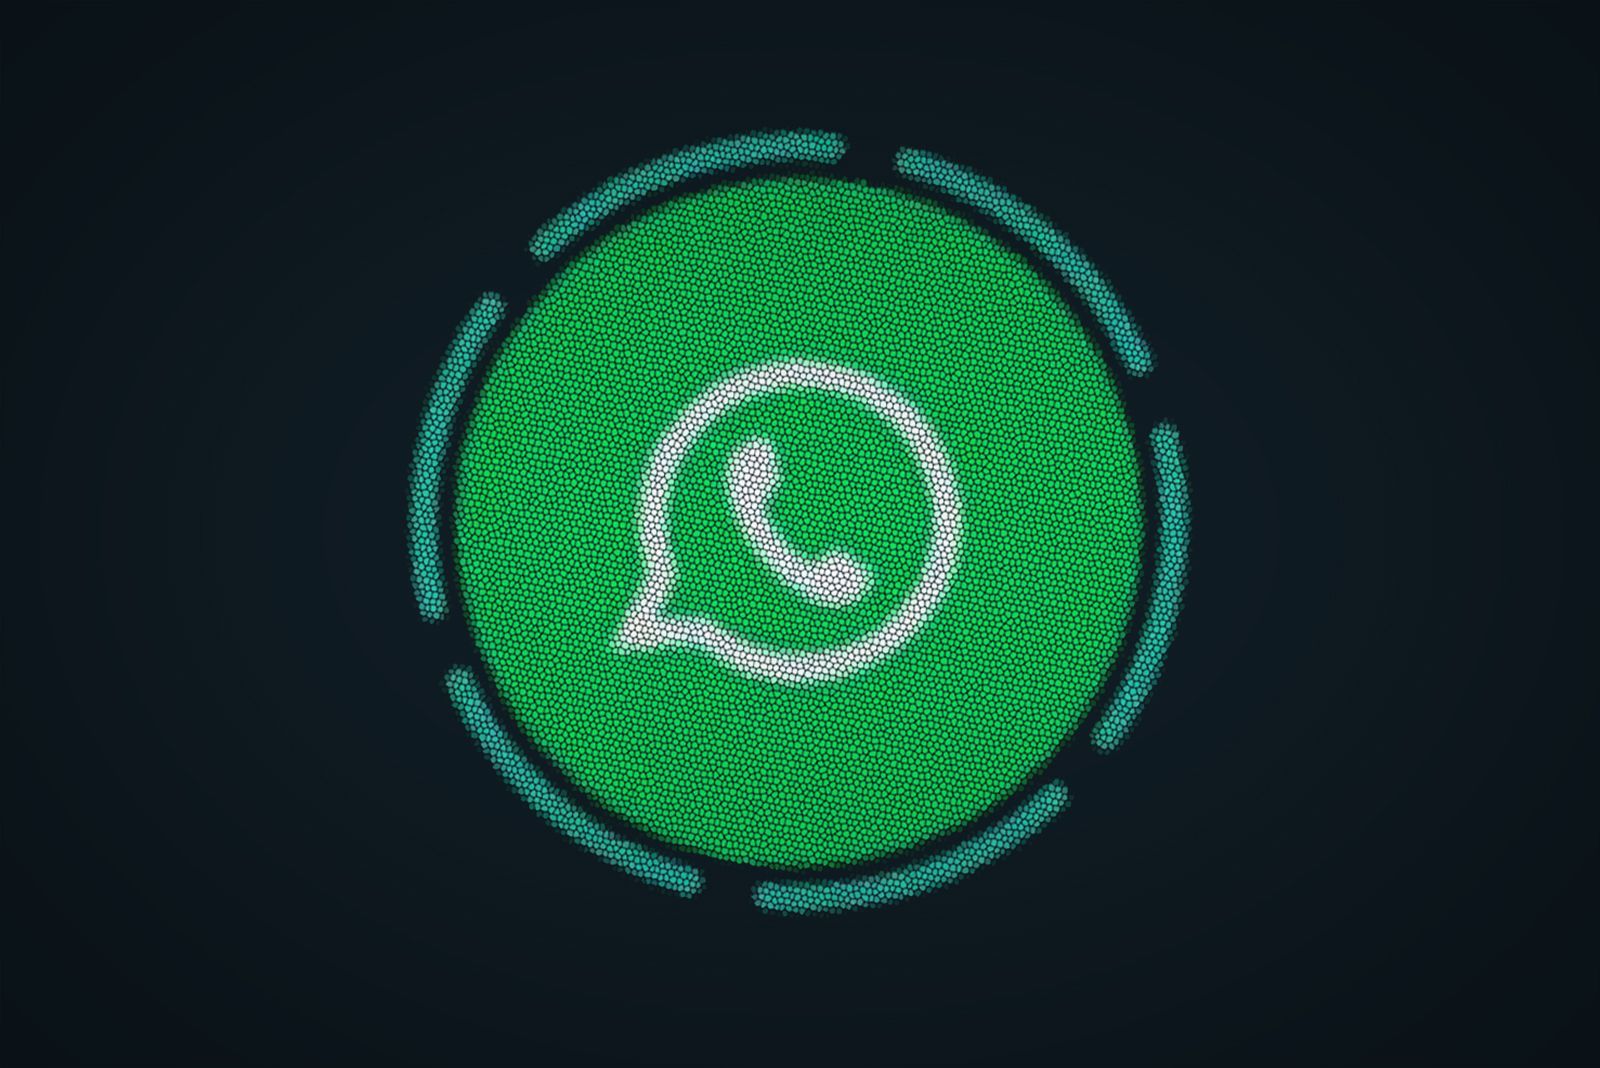 How to use dark mode on WhatsApp